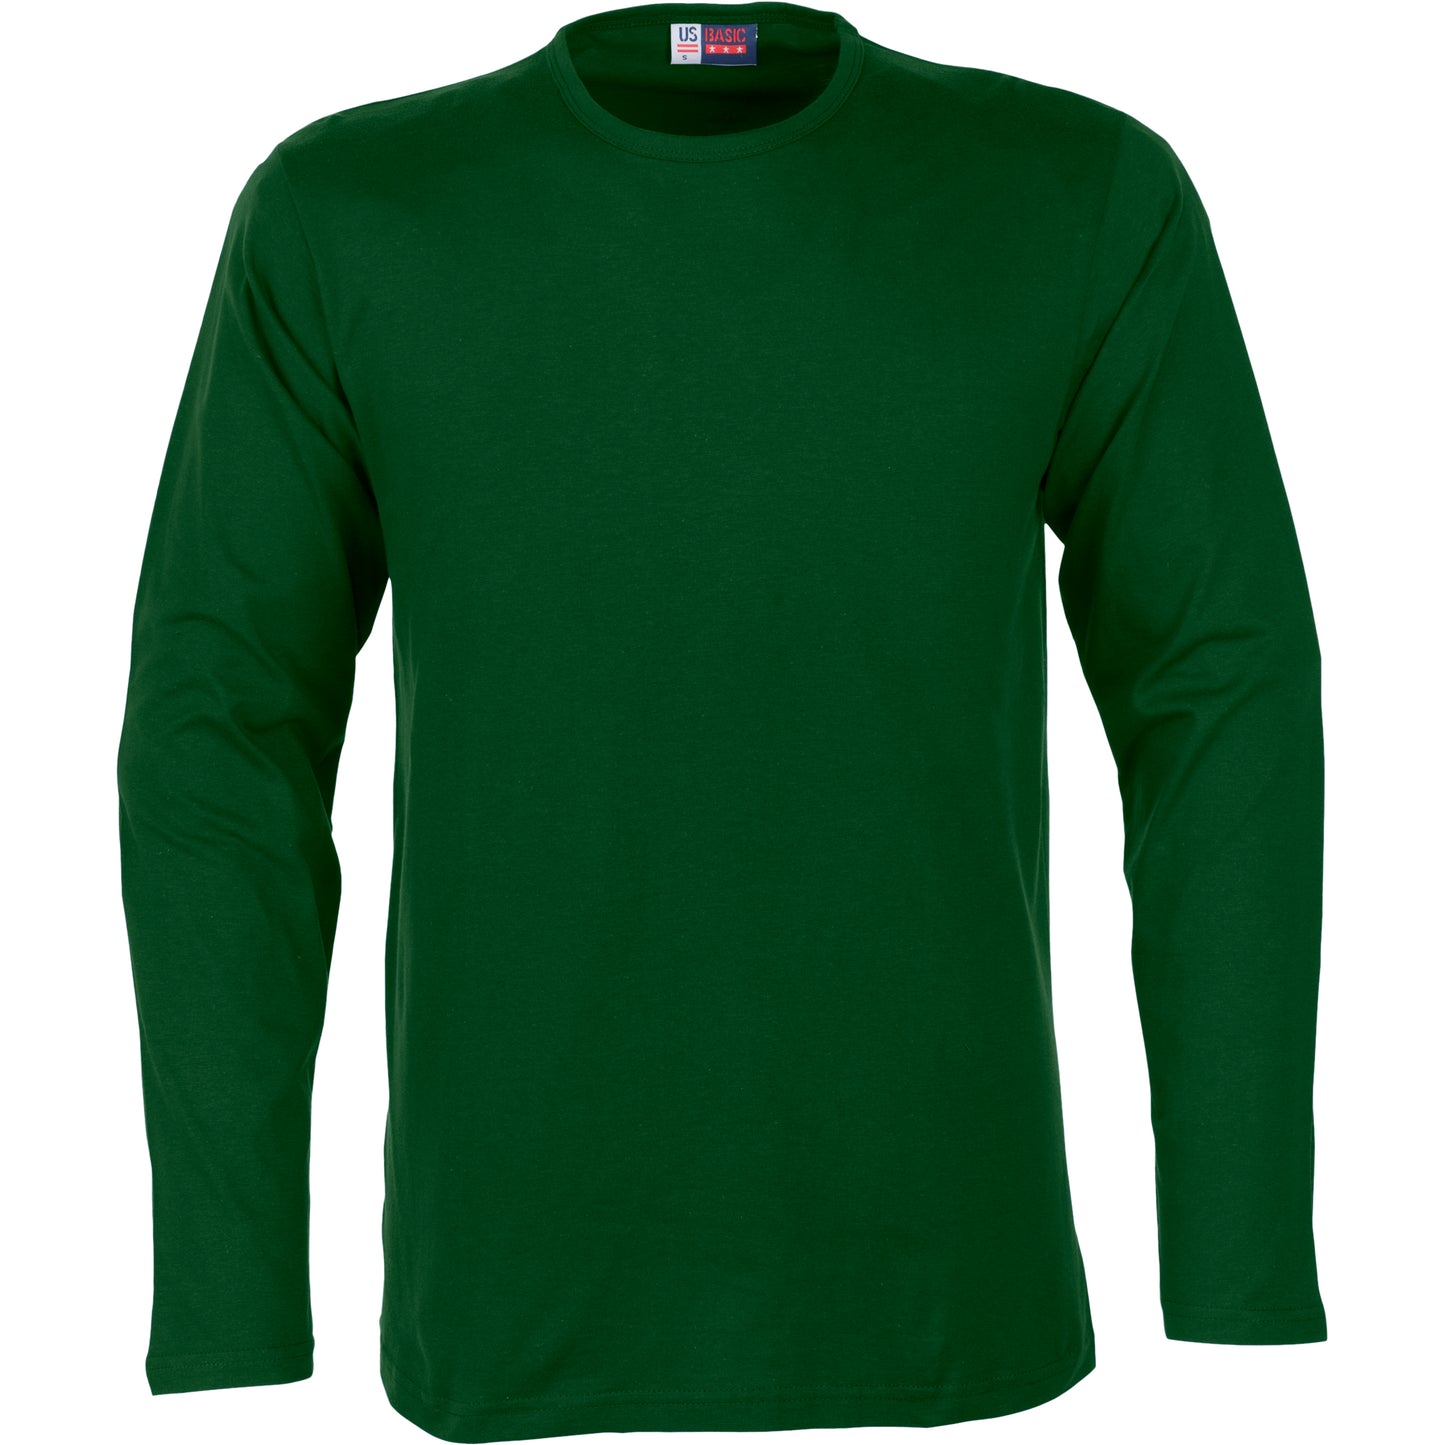 Mens Long Sleeve Portland T-Shirt  - Green Only